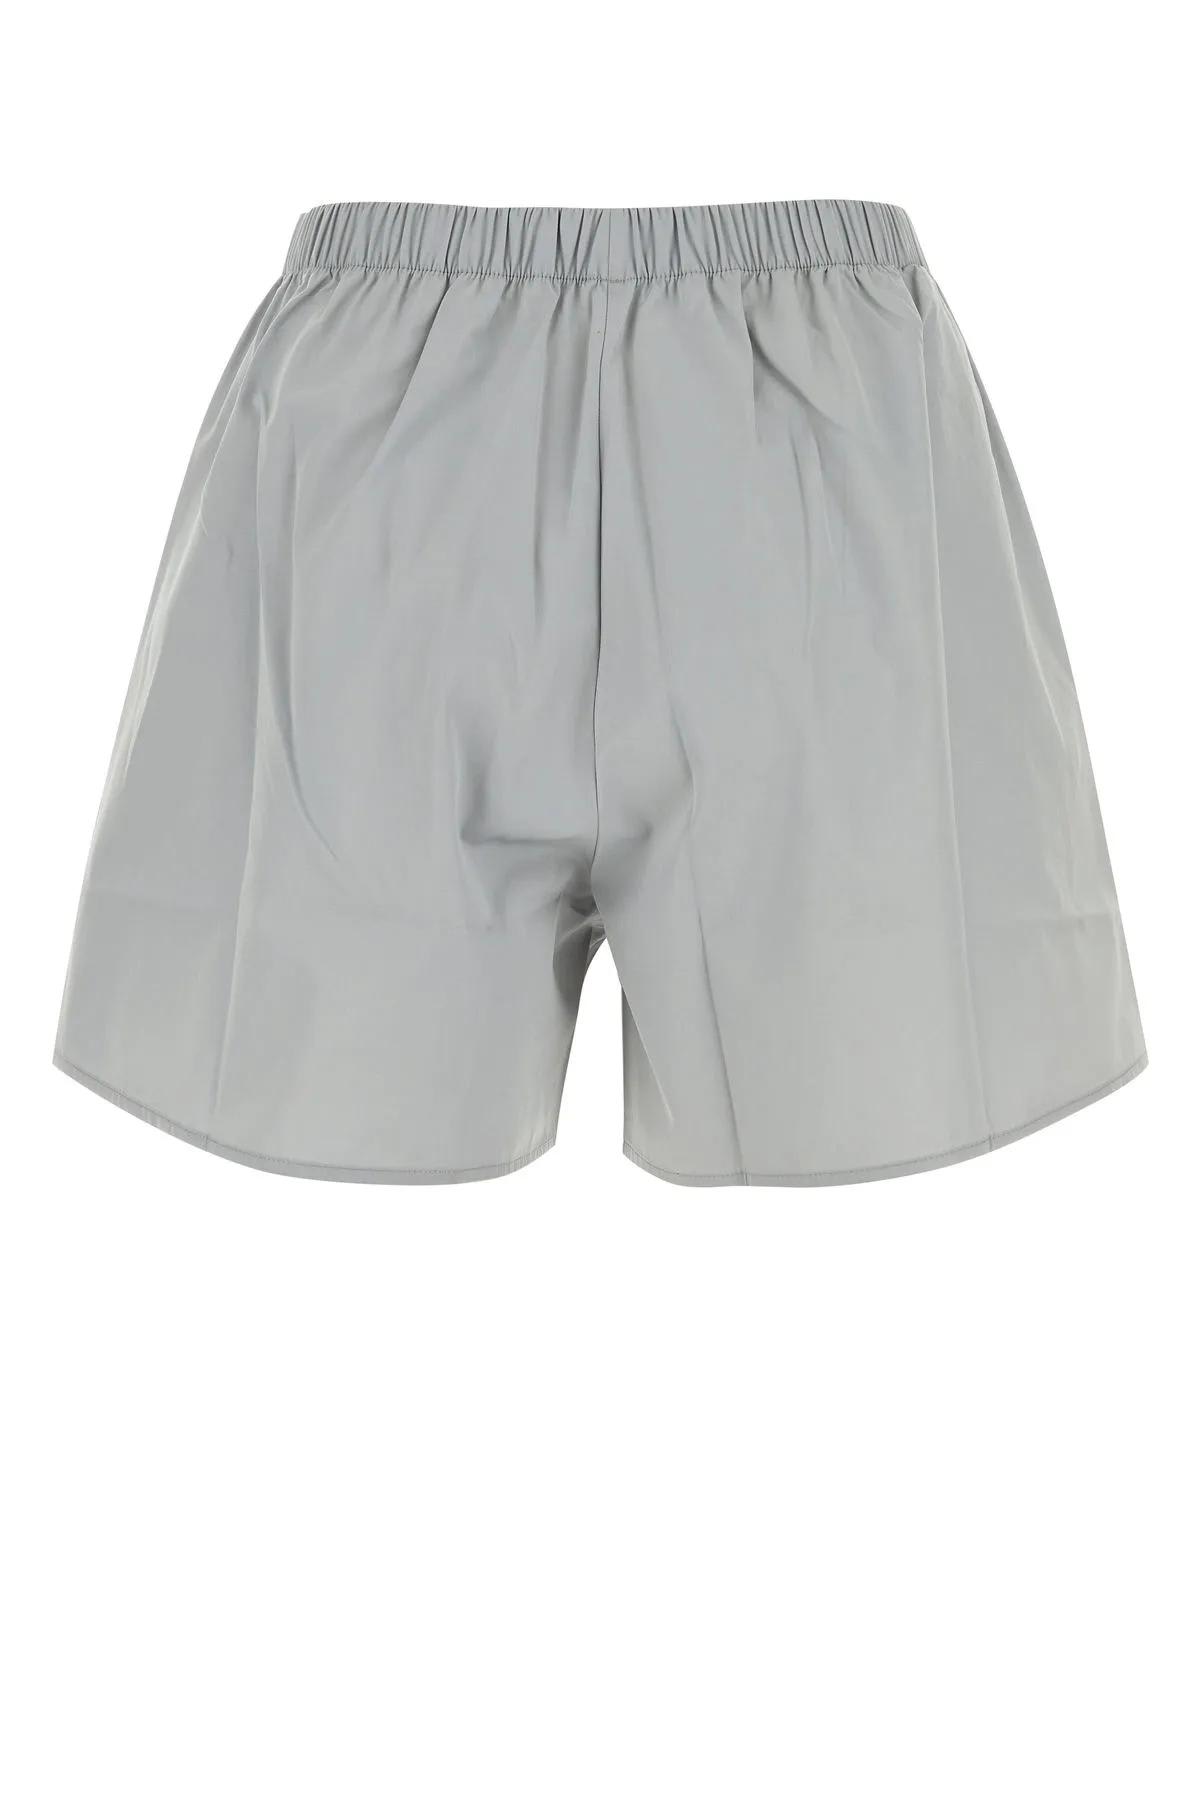 Shop Miu Miu Light Grey Cotton Shorts